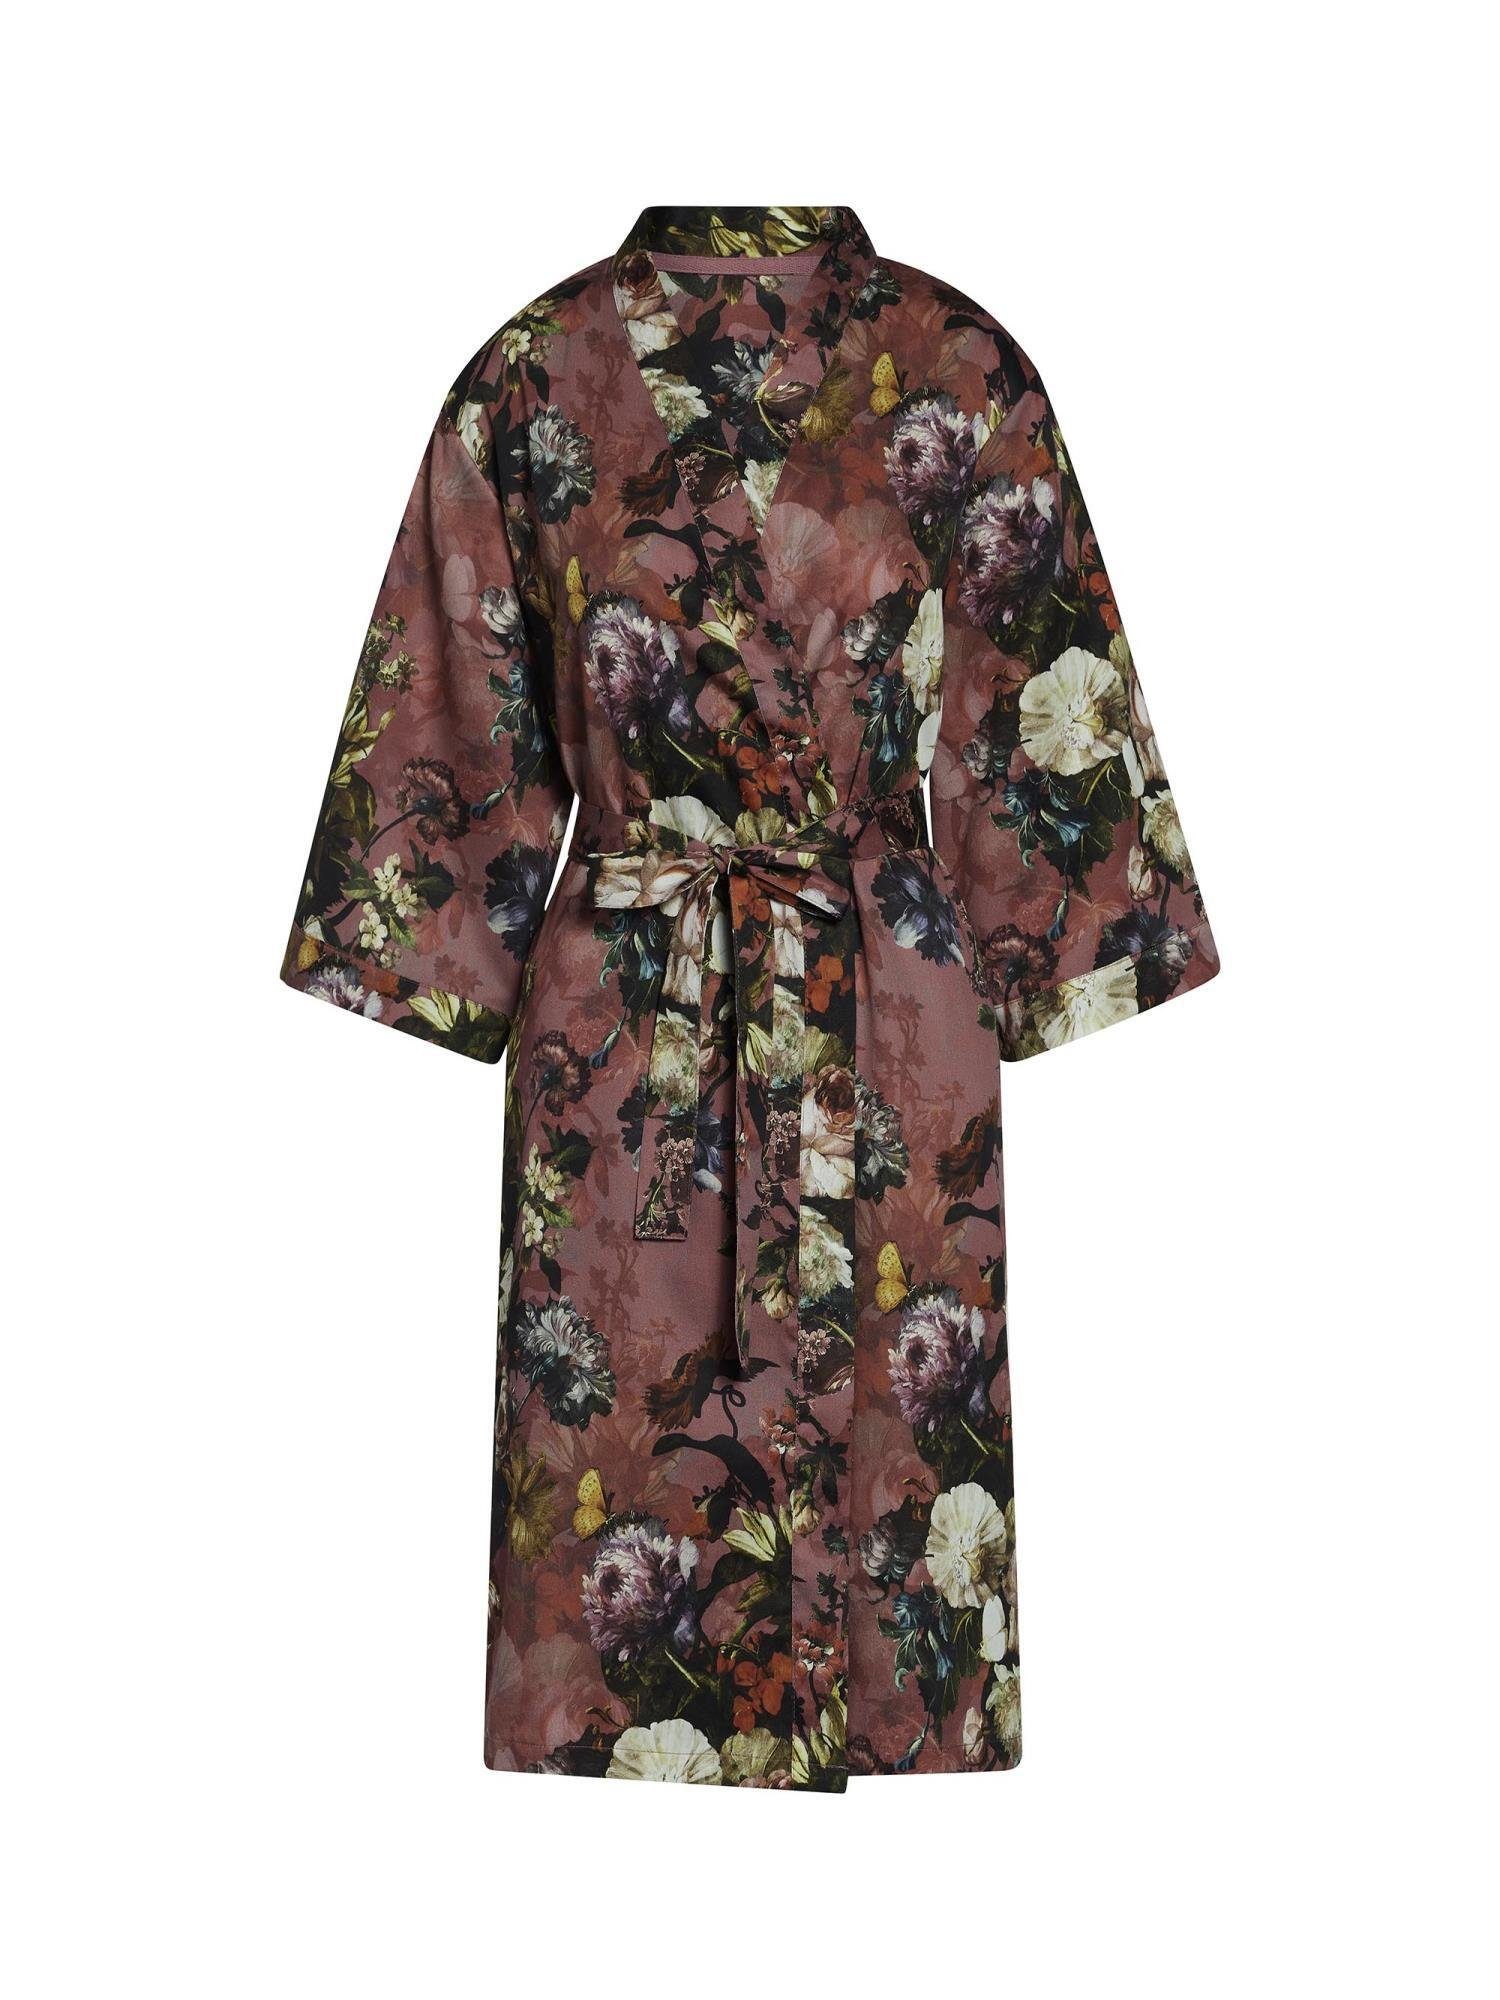 Essenza Kimono sarai karli, Kurzform, Baumwolle, Kimono-Kragen, Gürtel, mit wunderschönem Blumenprin magnolia pink